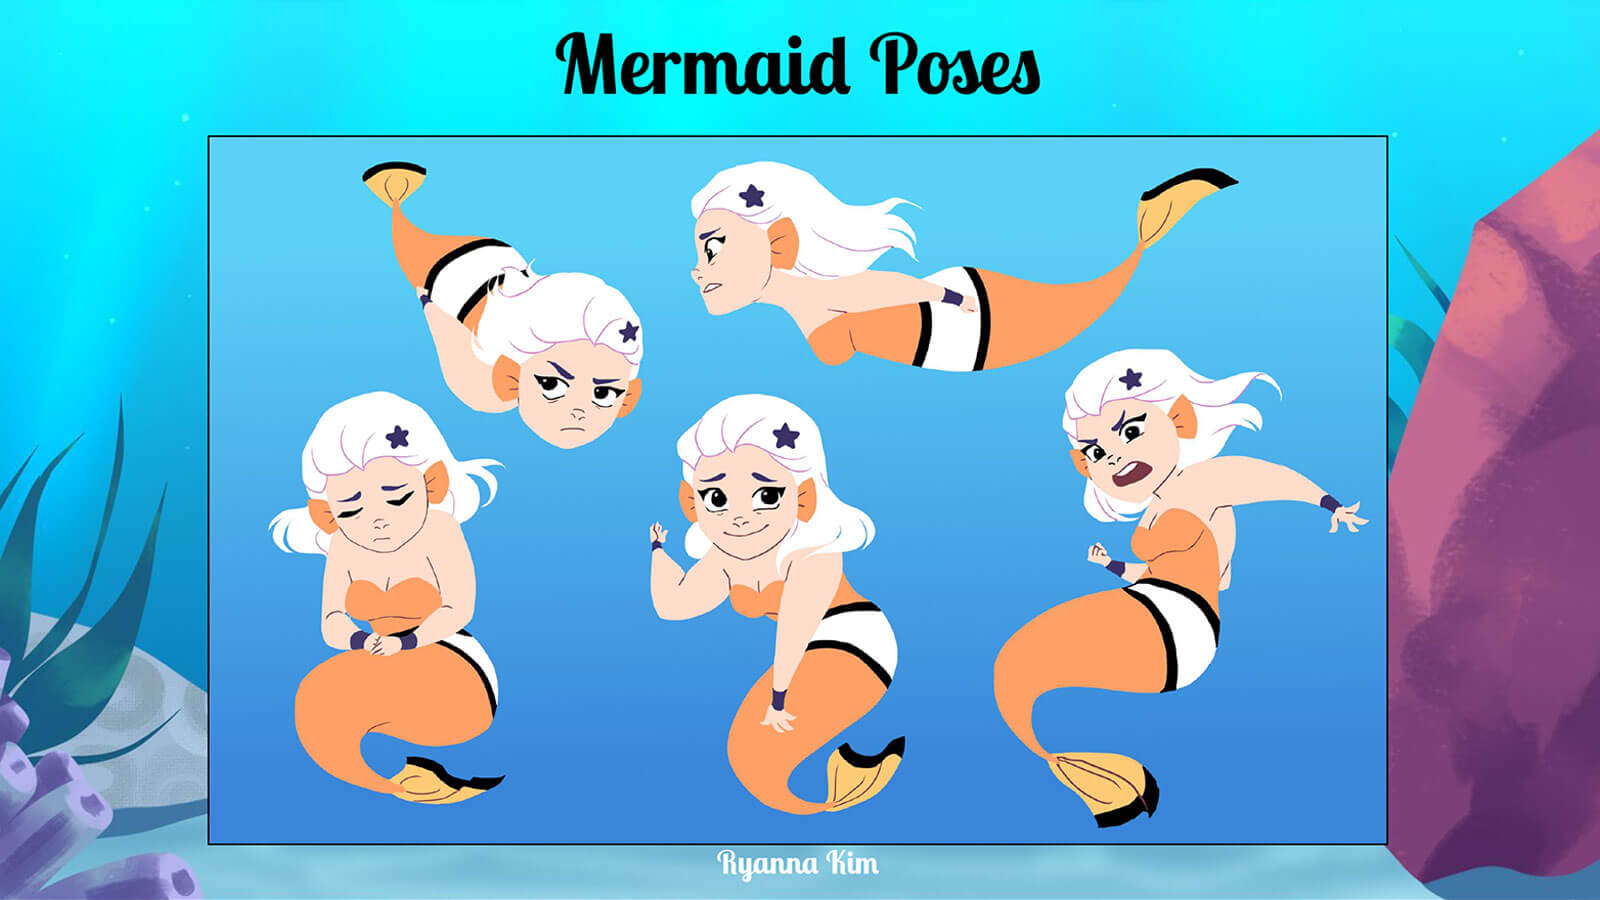 Various mermaid character poses